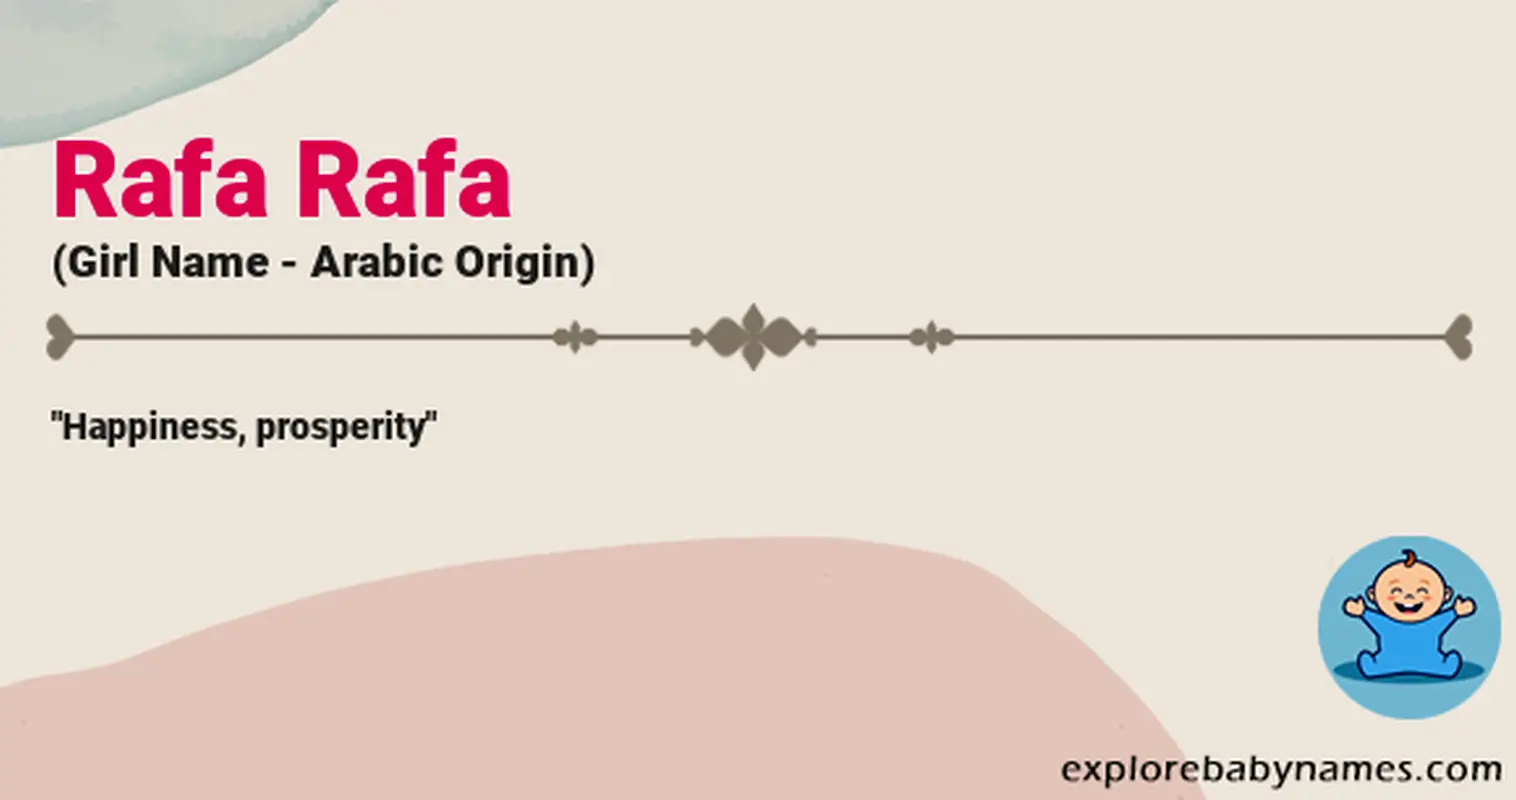 Meaning of Rafa Rafa